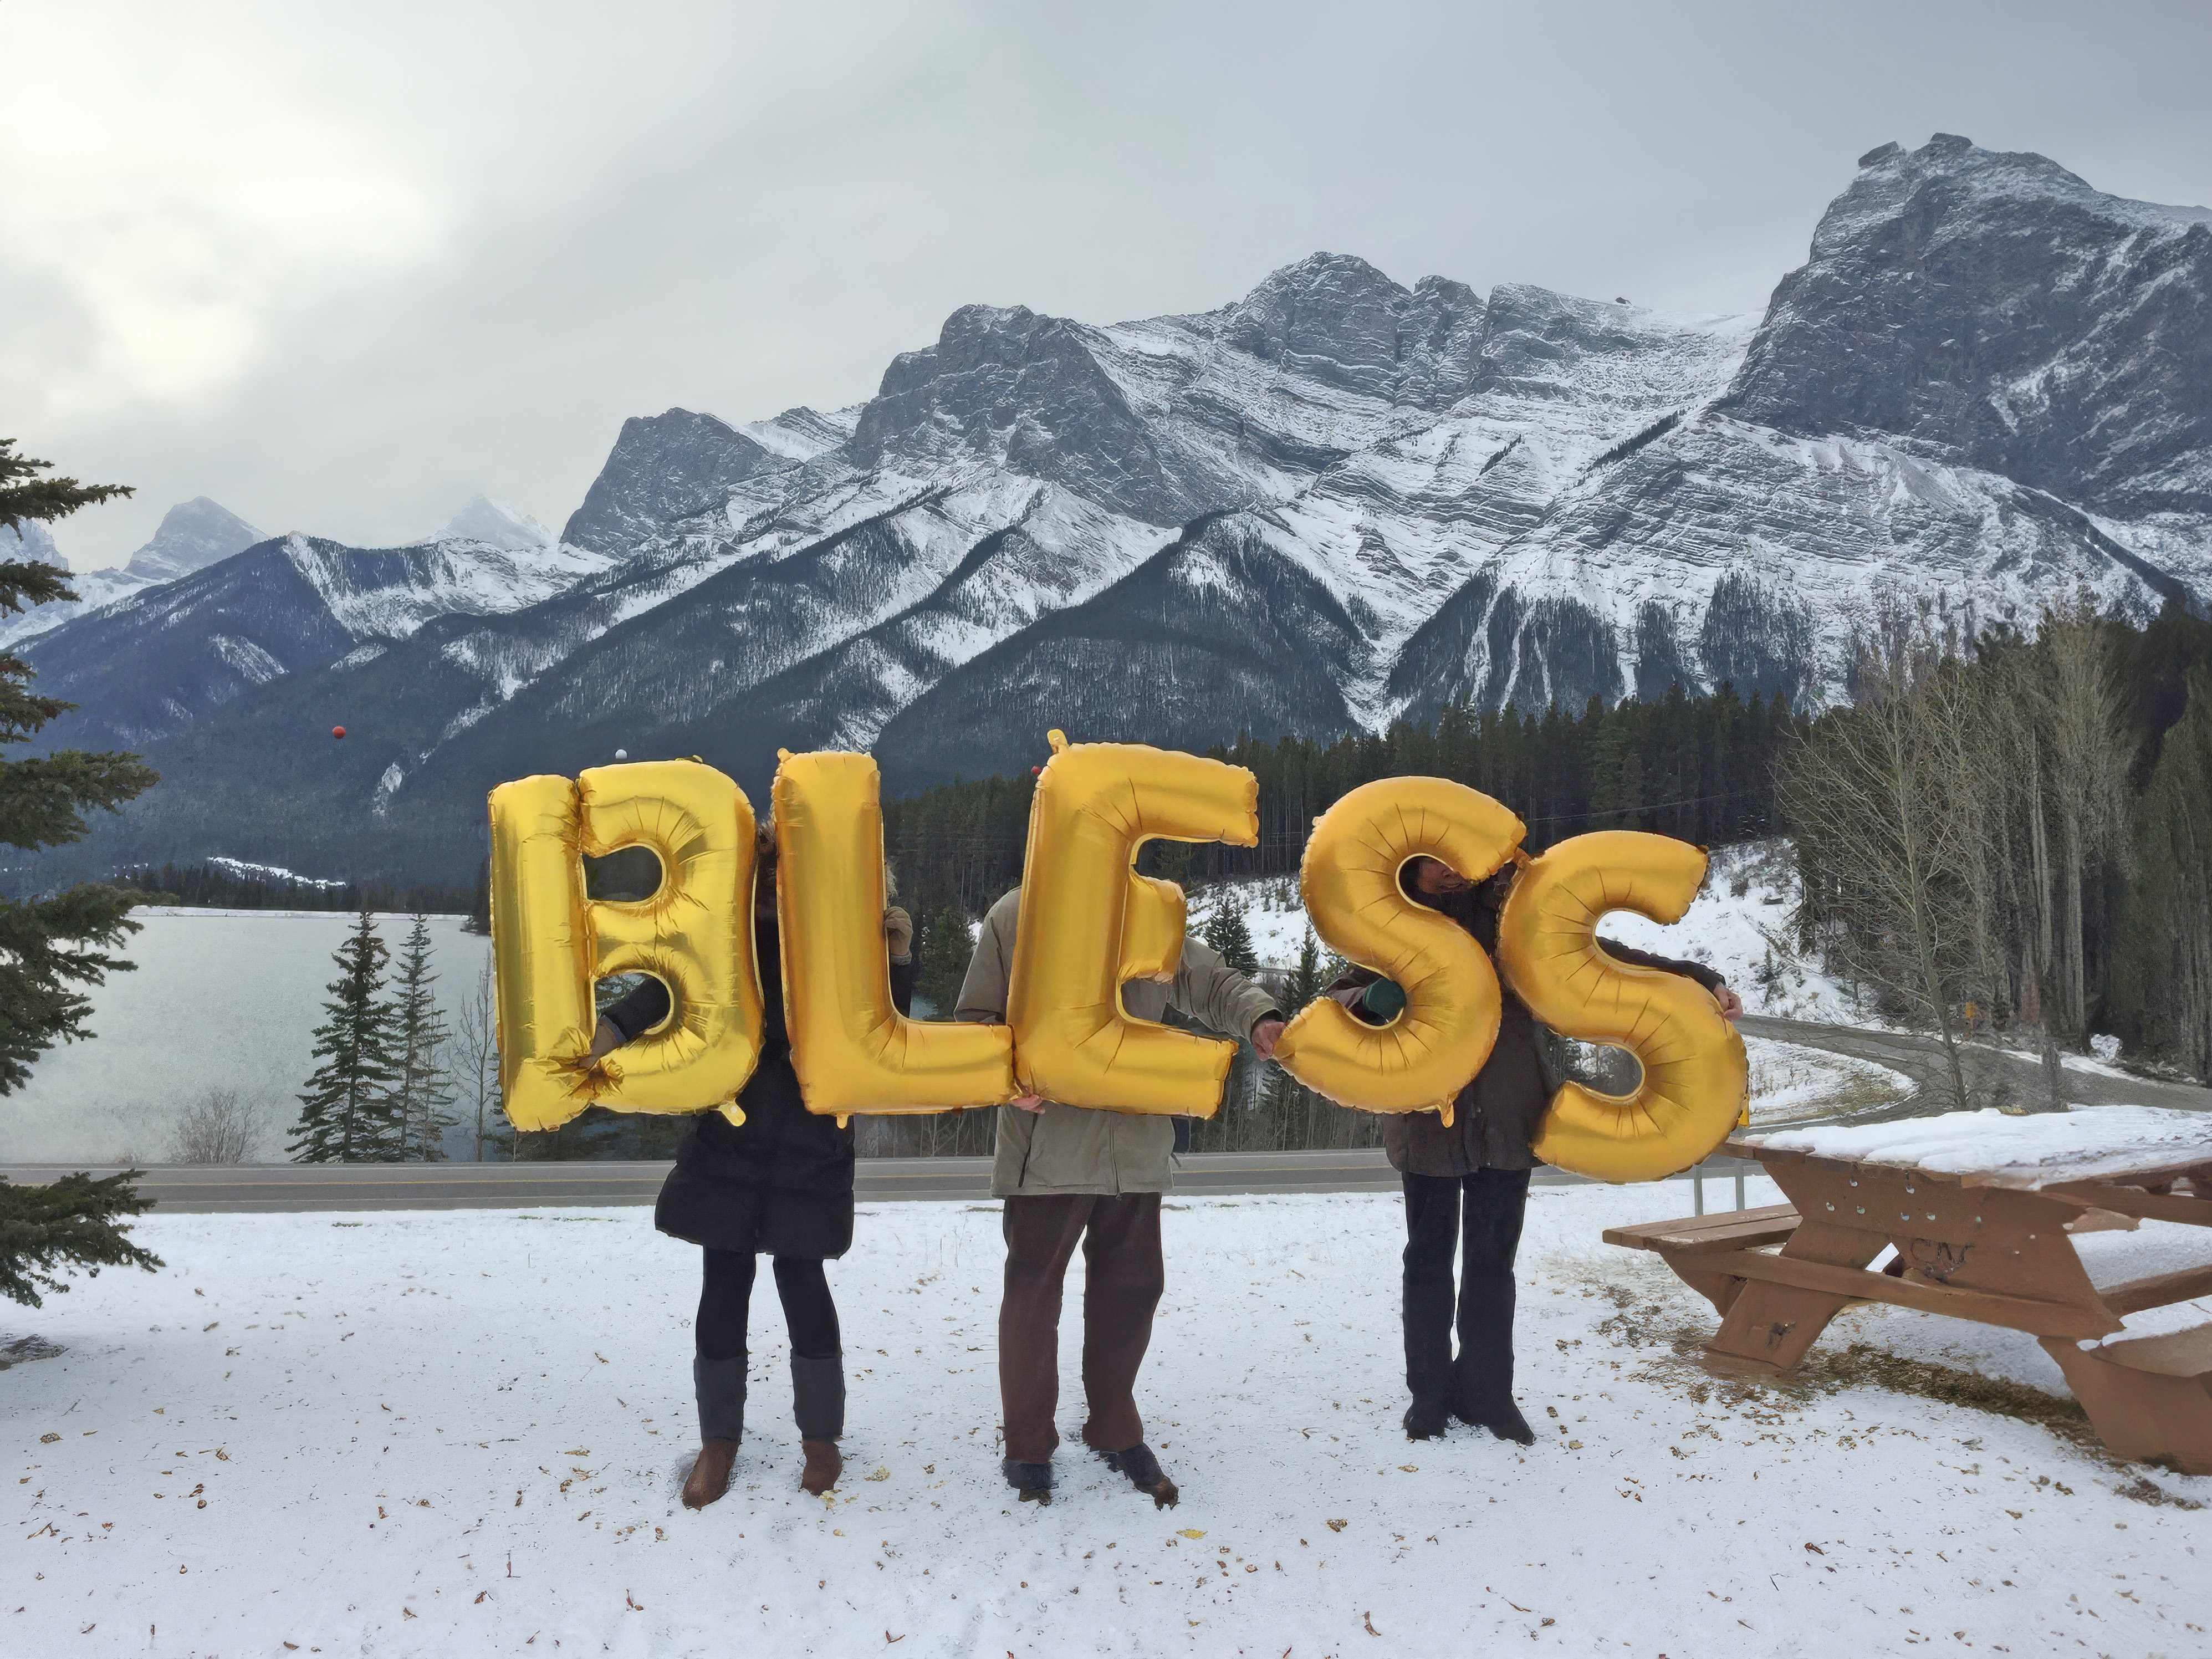 Canada, Banff - Bless, Silence Was Golden, gold balloons